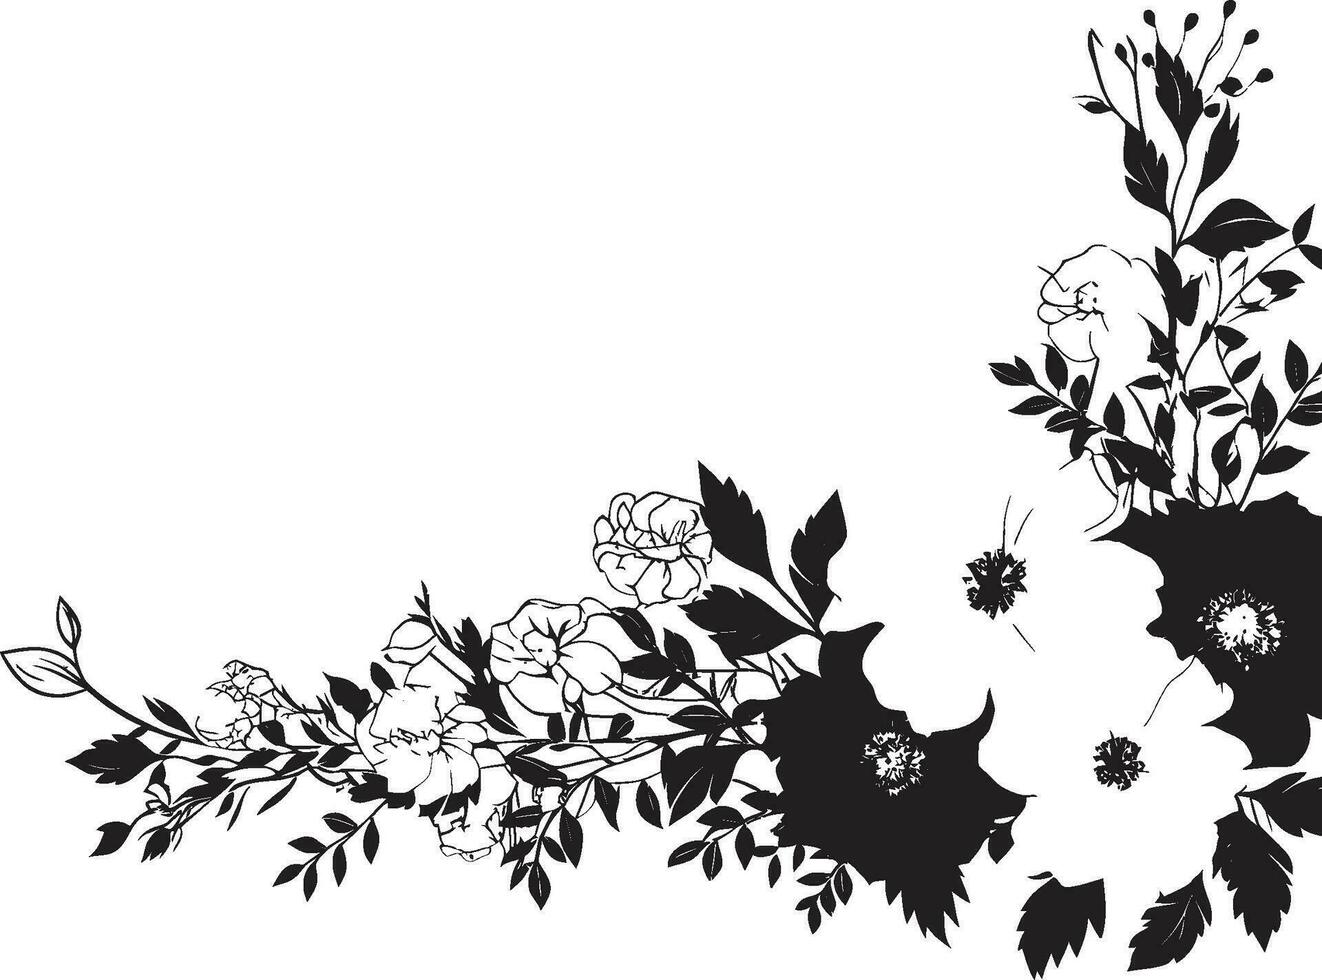 Ethereal Floral Elegance Ornate Black Vector Logos Monochrome Inked Bouquets Invitation Card Decorative Art